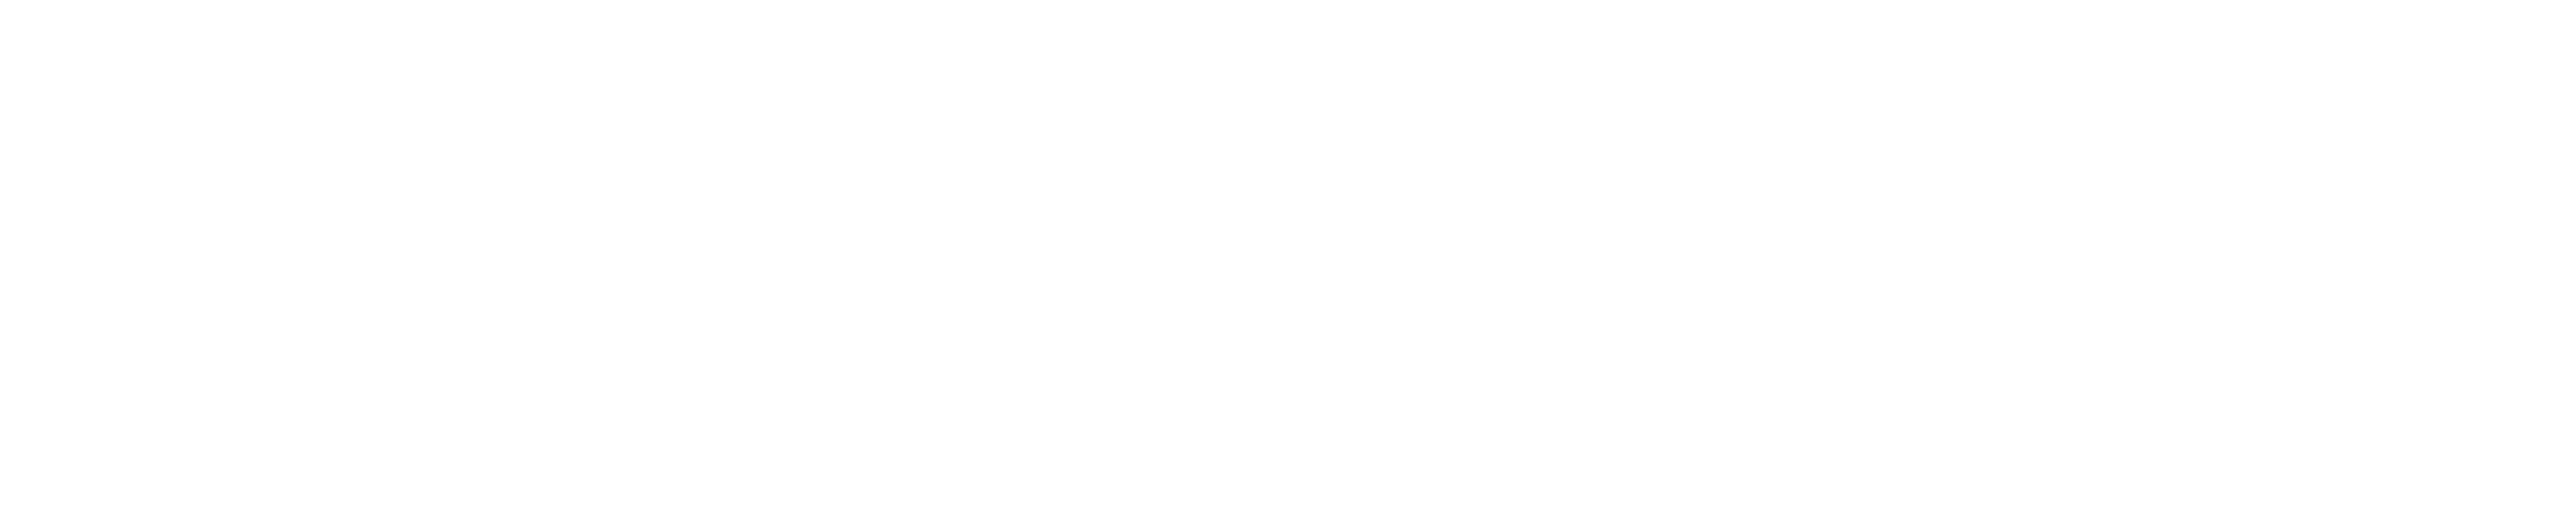 UP Property